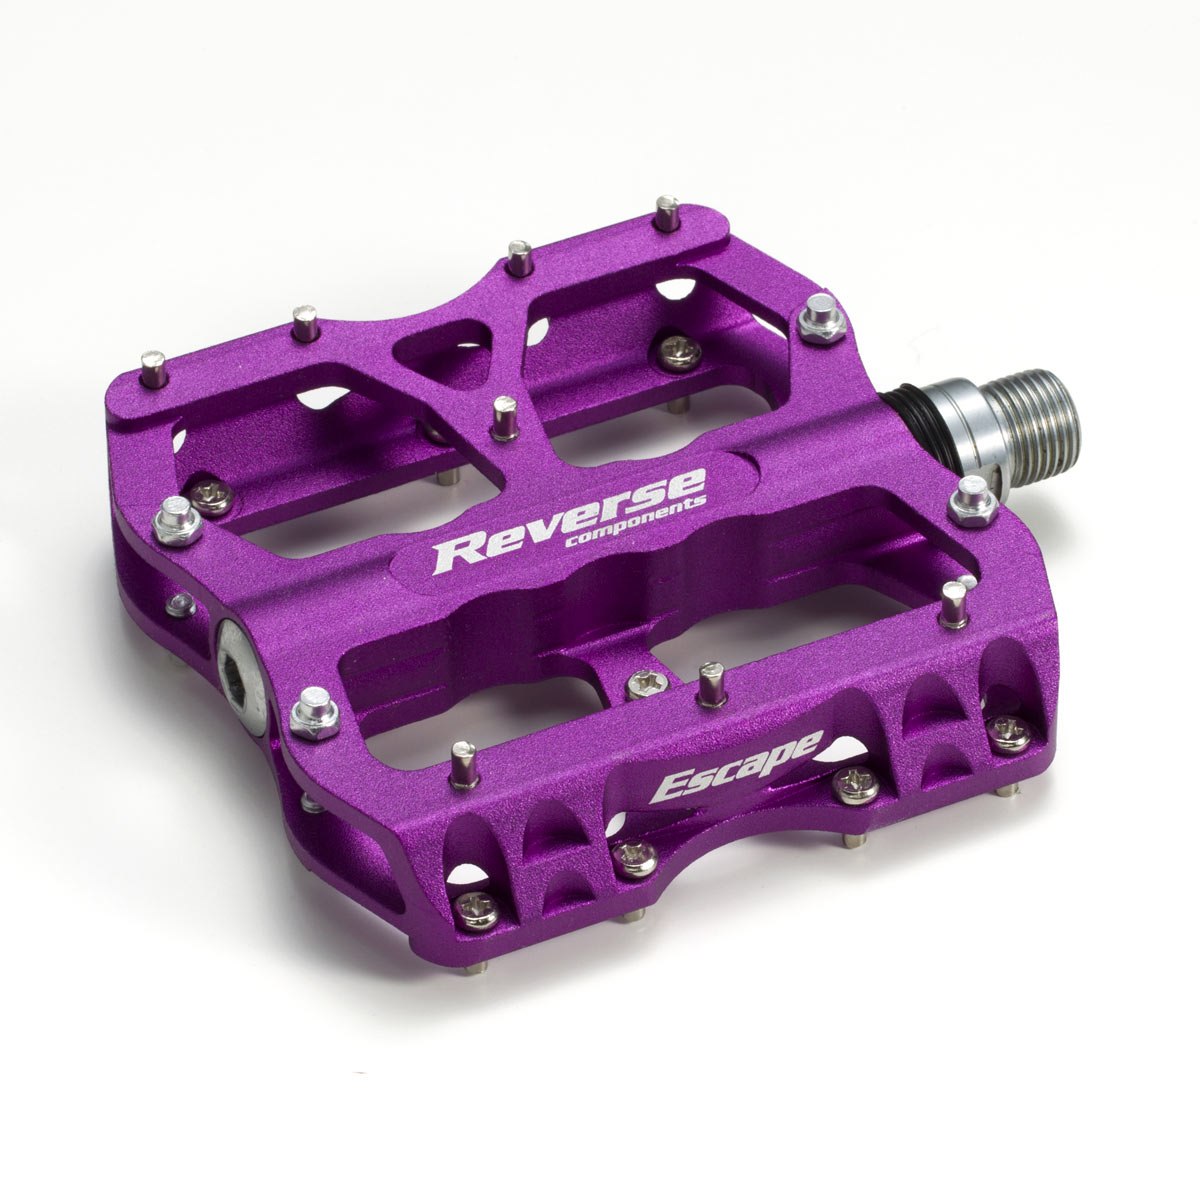 Produktbild von Reverse Components Escape Pedal - violett sandgestrahlt